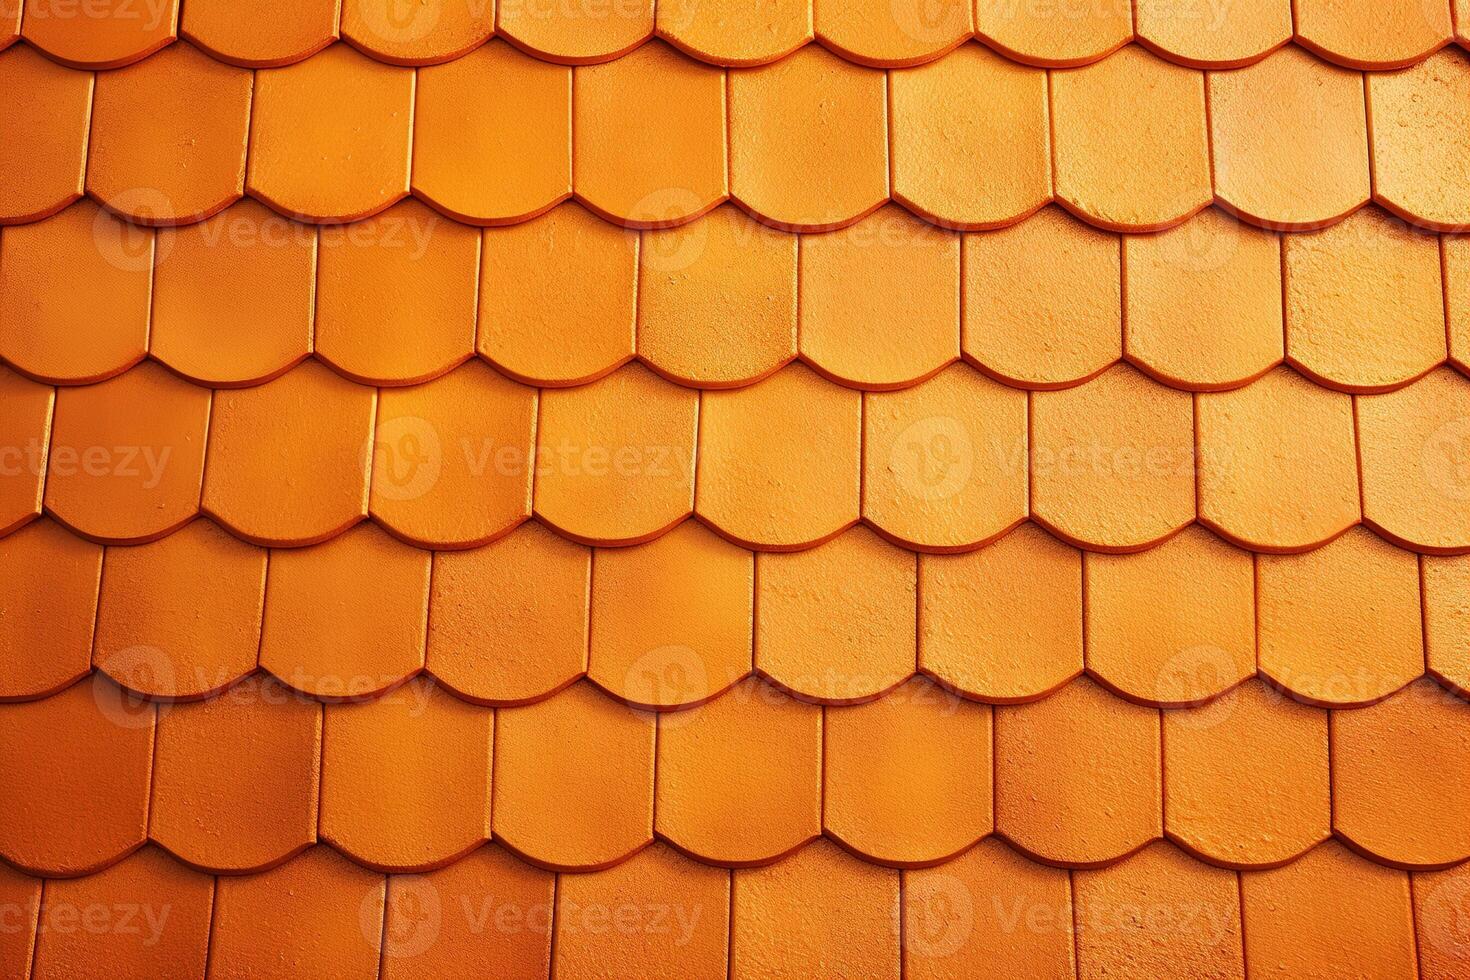 ai generado nuevo naranja terracota techo loseta superficie texturizado antecedentes foto